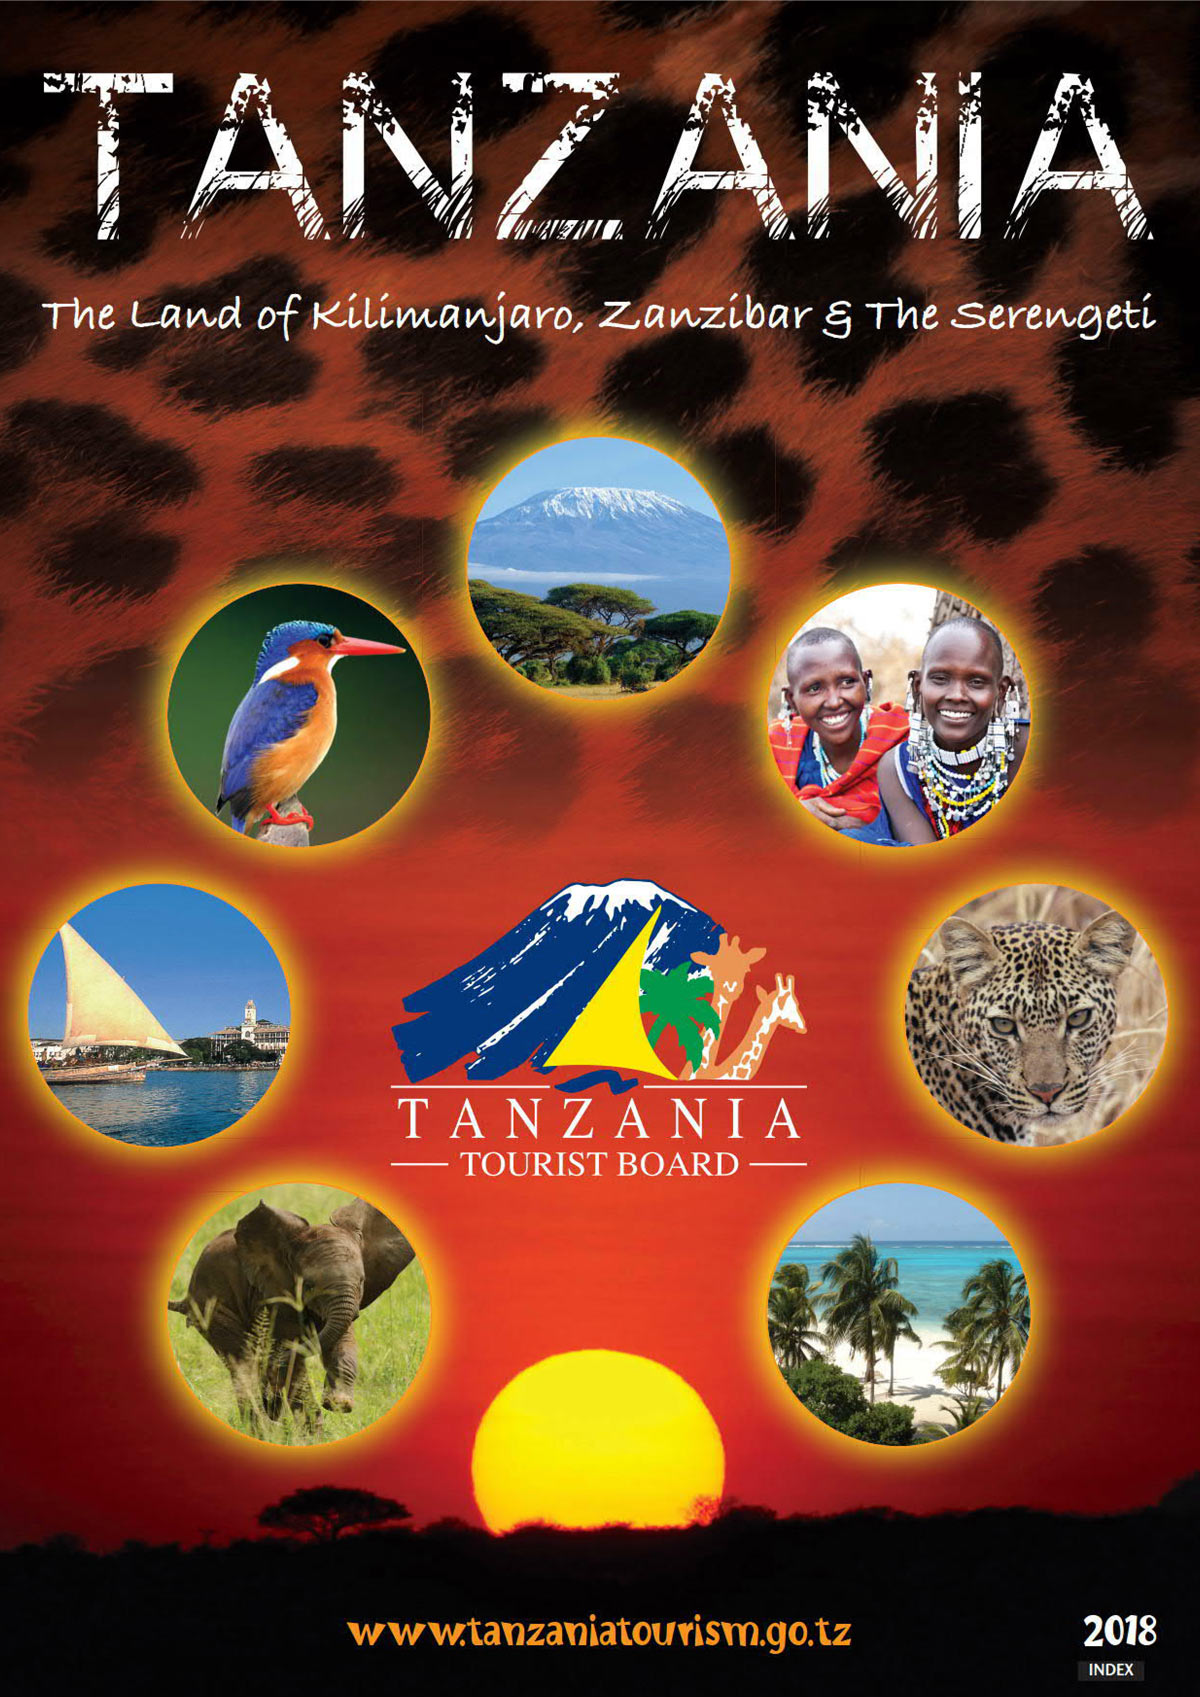 Tanzania, the Land of Kilimanjaro, Zanzibar and the Serengeti